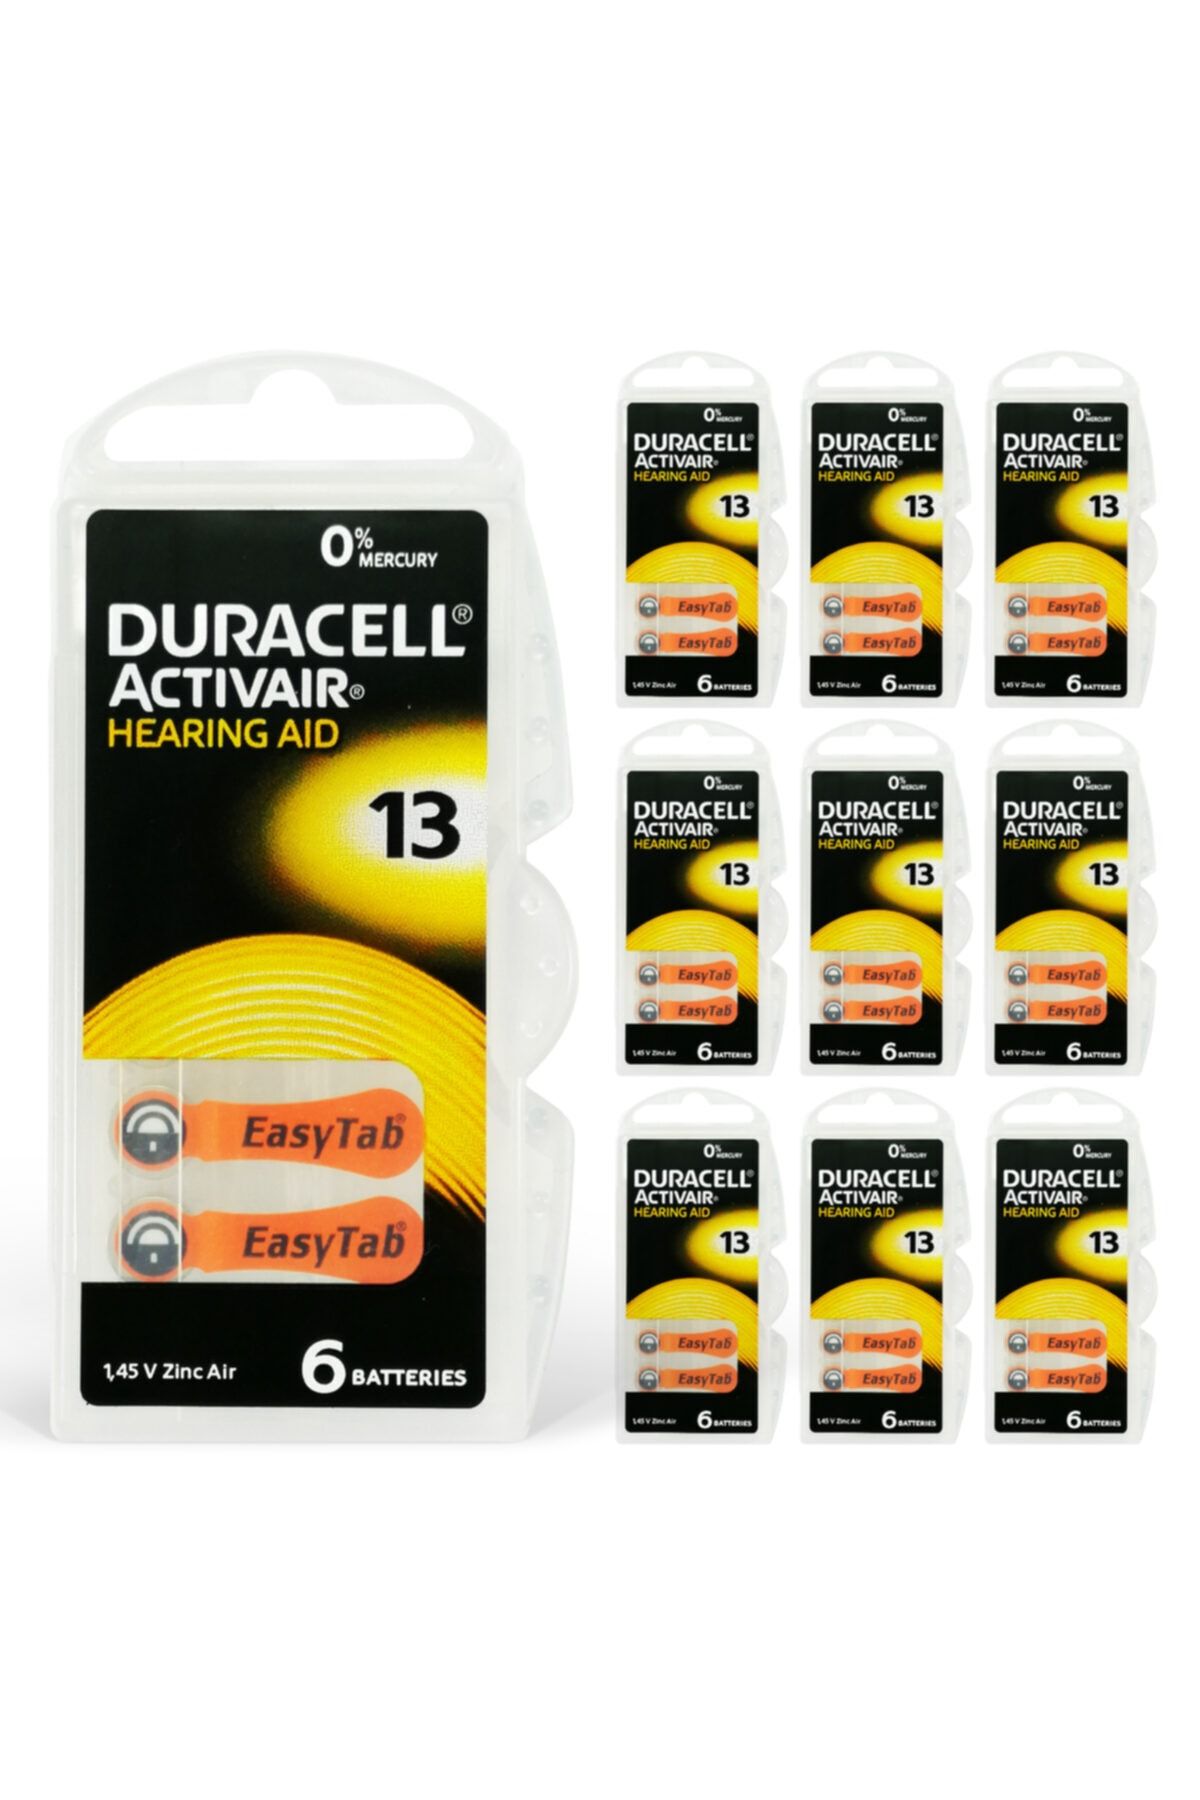 Duracell Activair 13 Numara Işitme Cihazı Pili 6x10 (60 Adet)